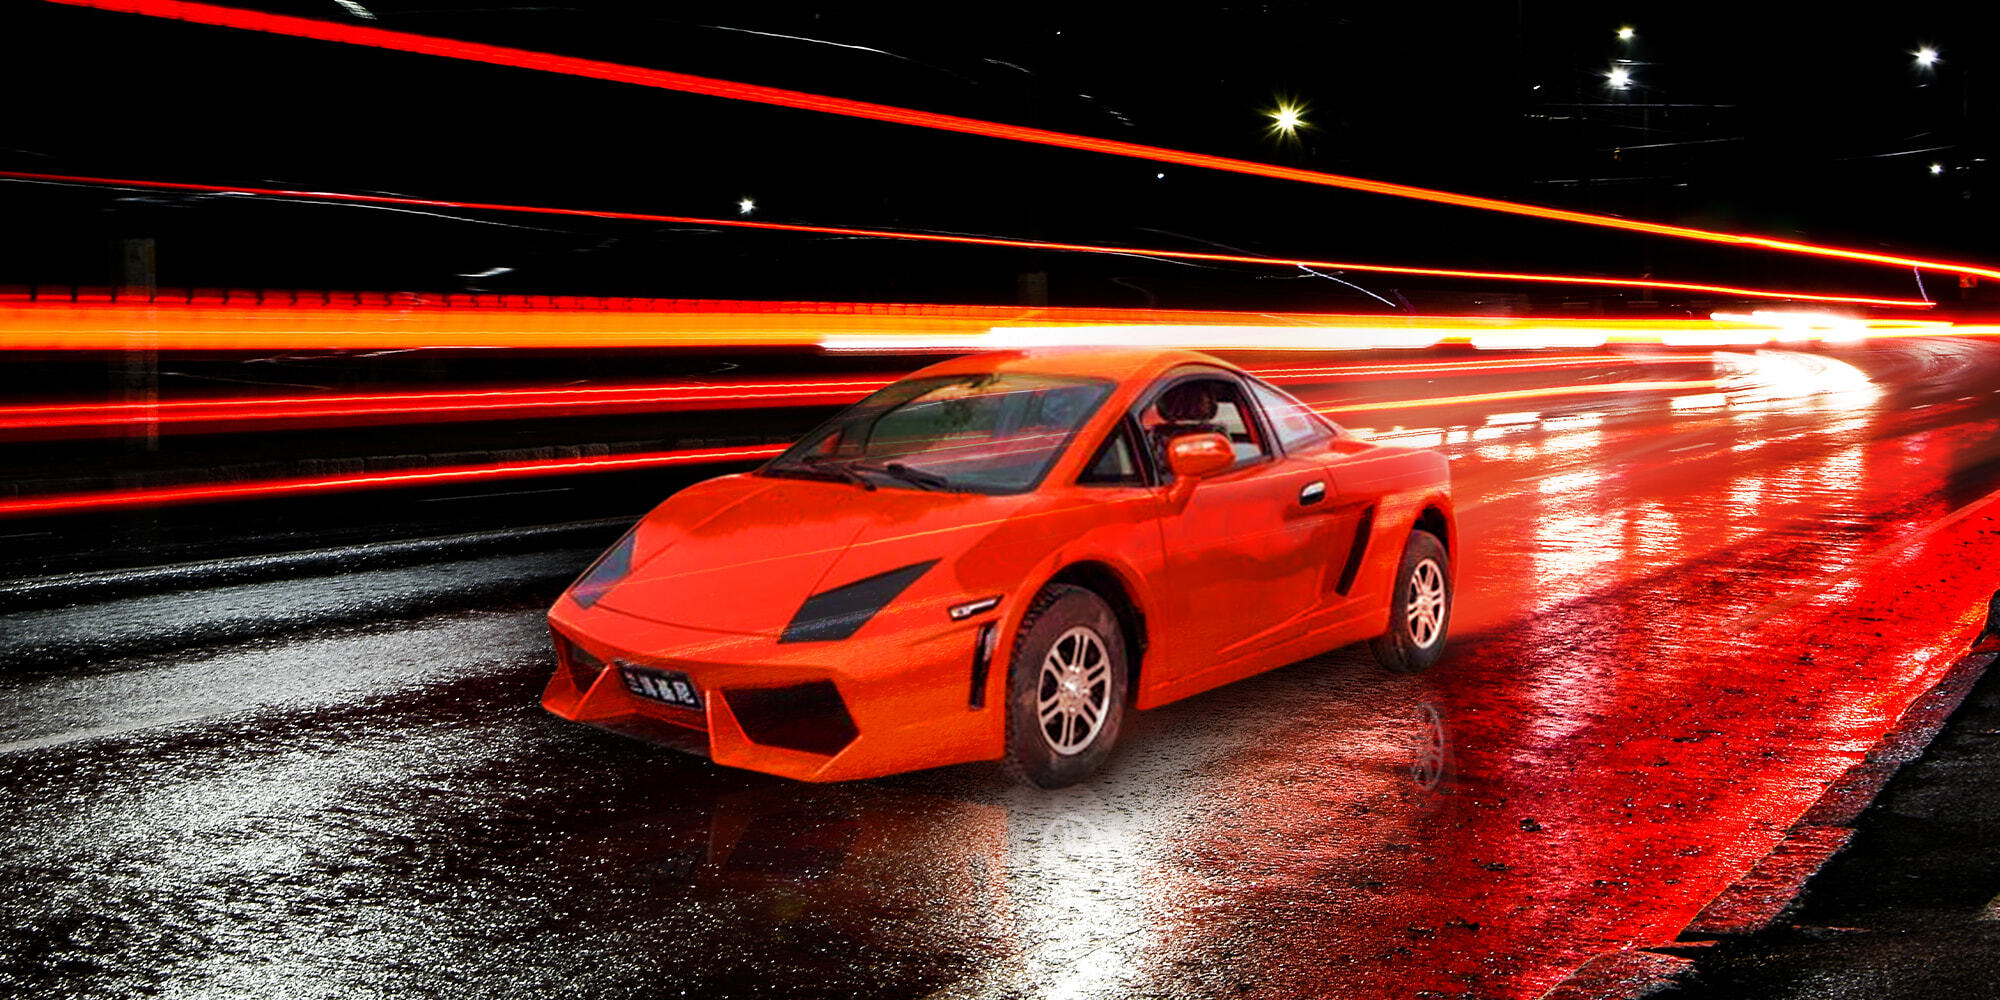 Awesomely Weird Alibaba EV of the Week: A Fake Electric Lamborghini